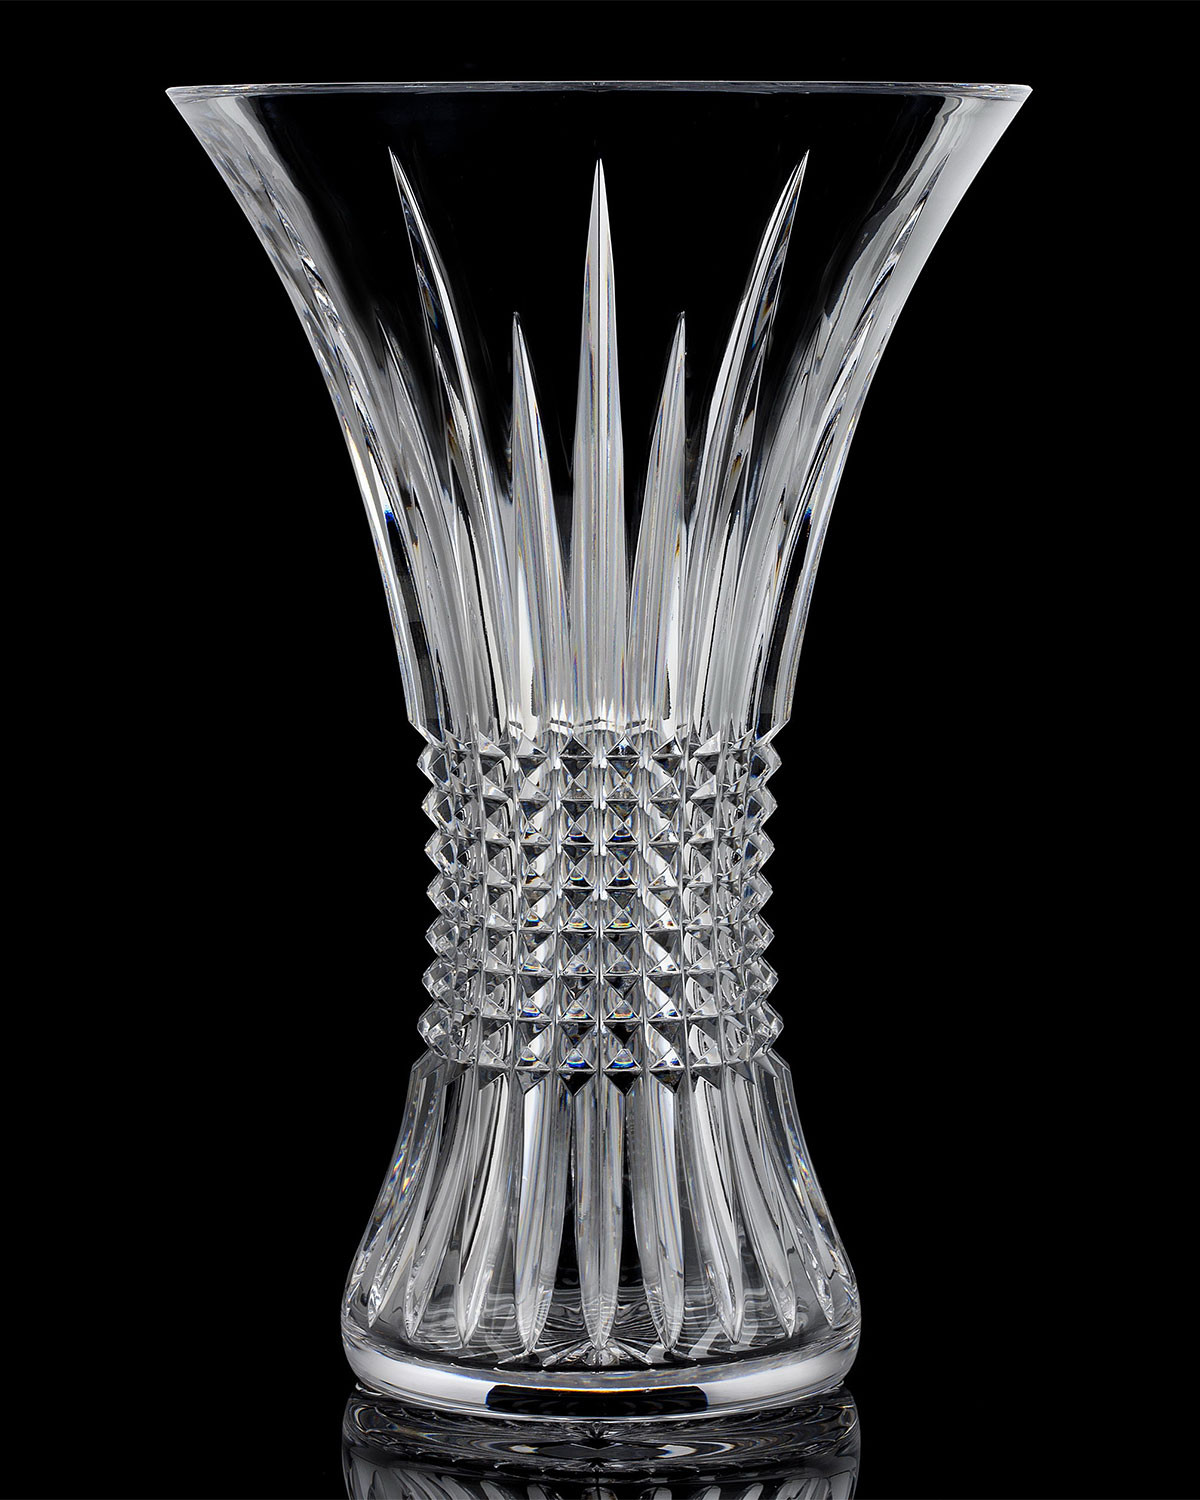 10 Fabulous Waterford Lismore Vase 8 2022 free download waterford lismore vase 8 of waterford crystal lismore diamond 12 vase neiman marcus inside lismore diamond 12 vase